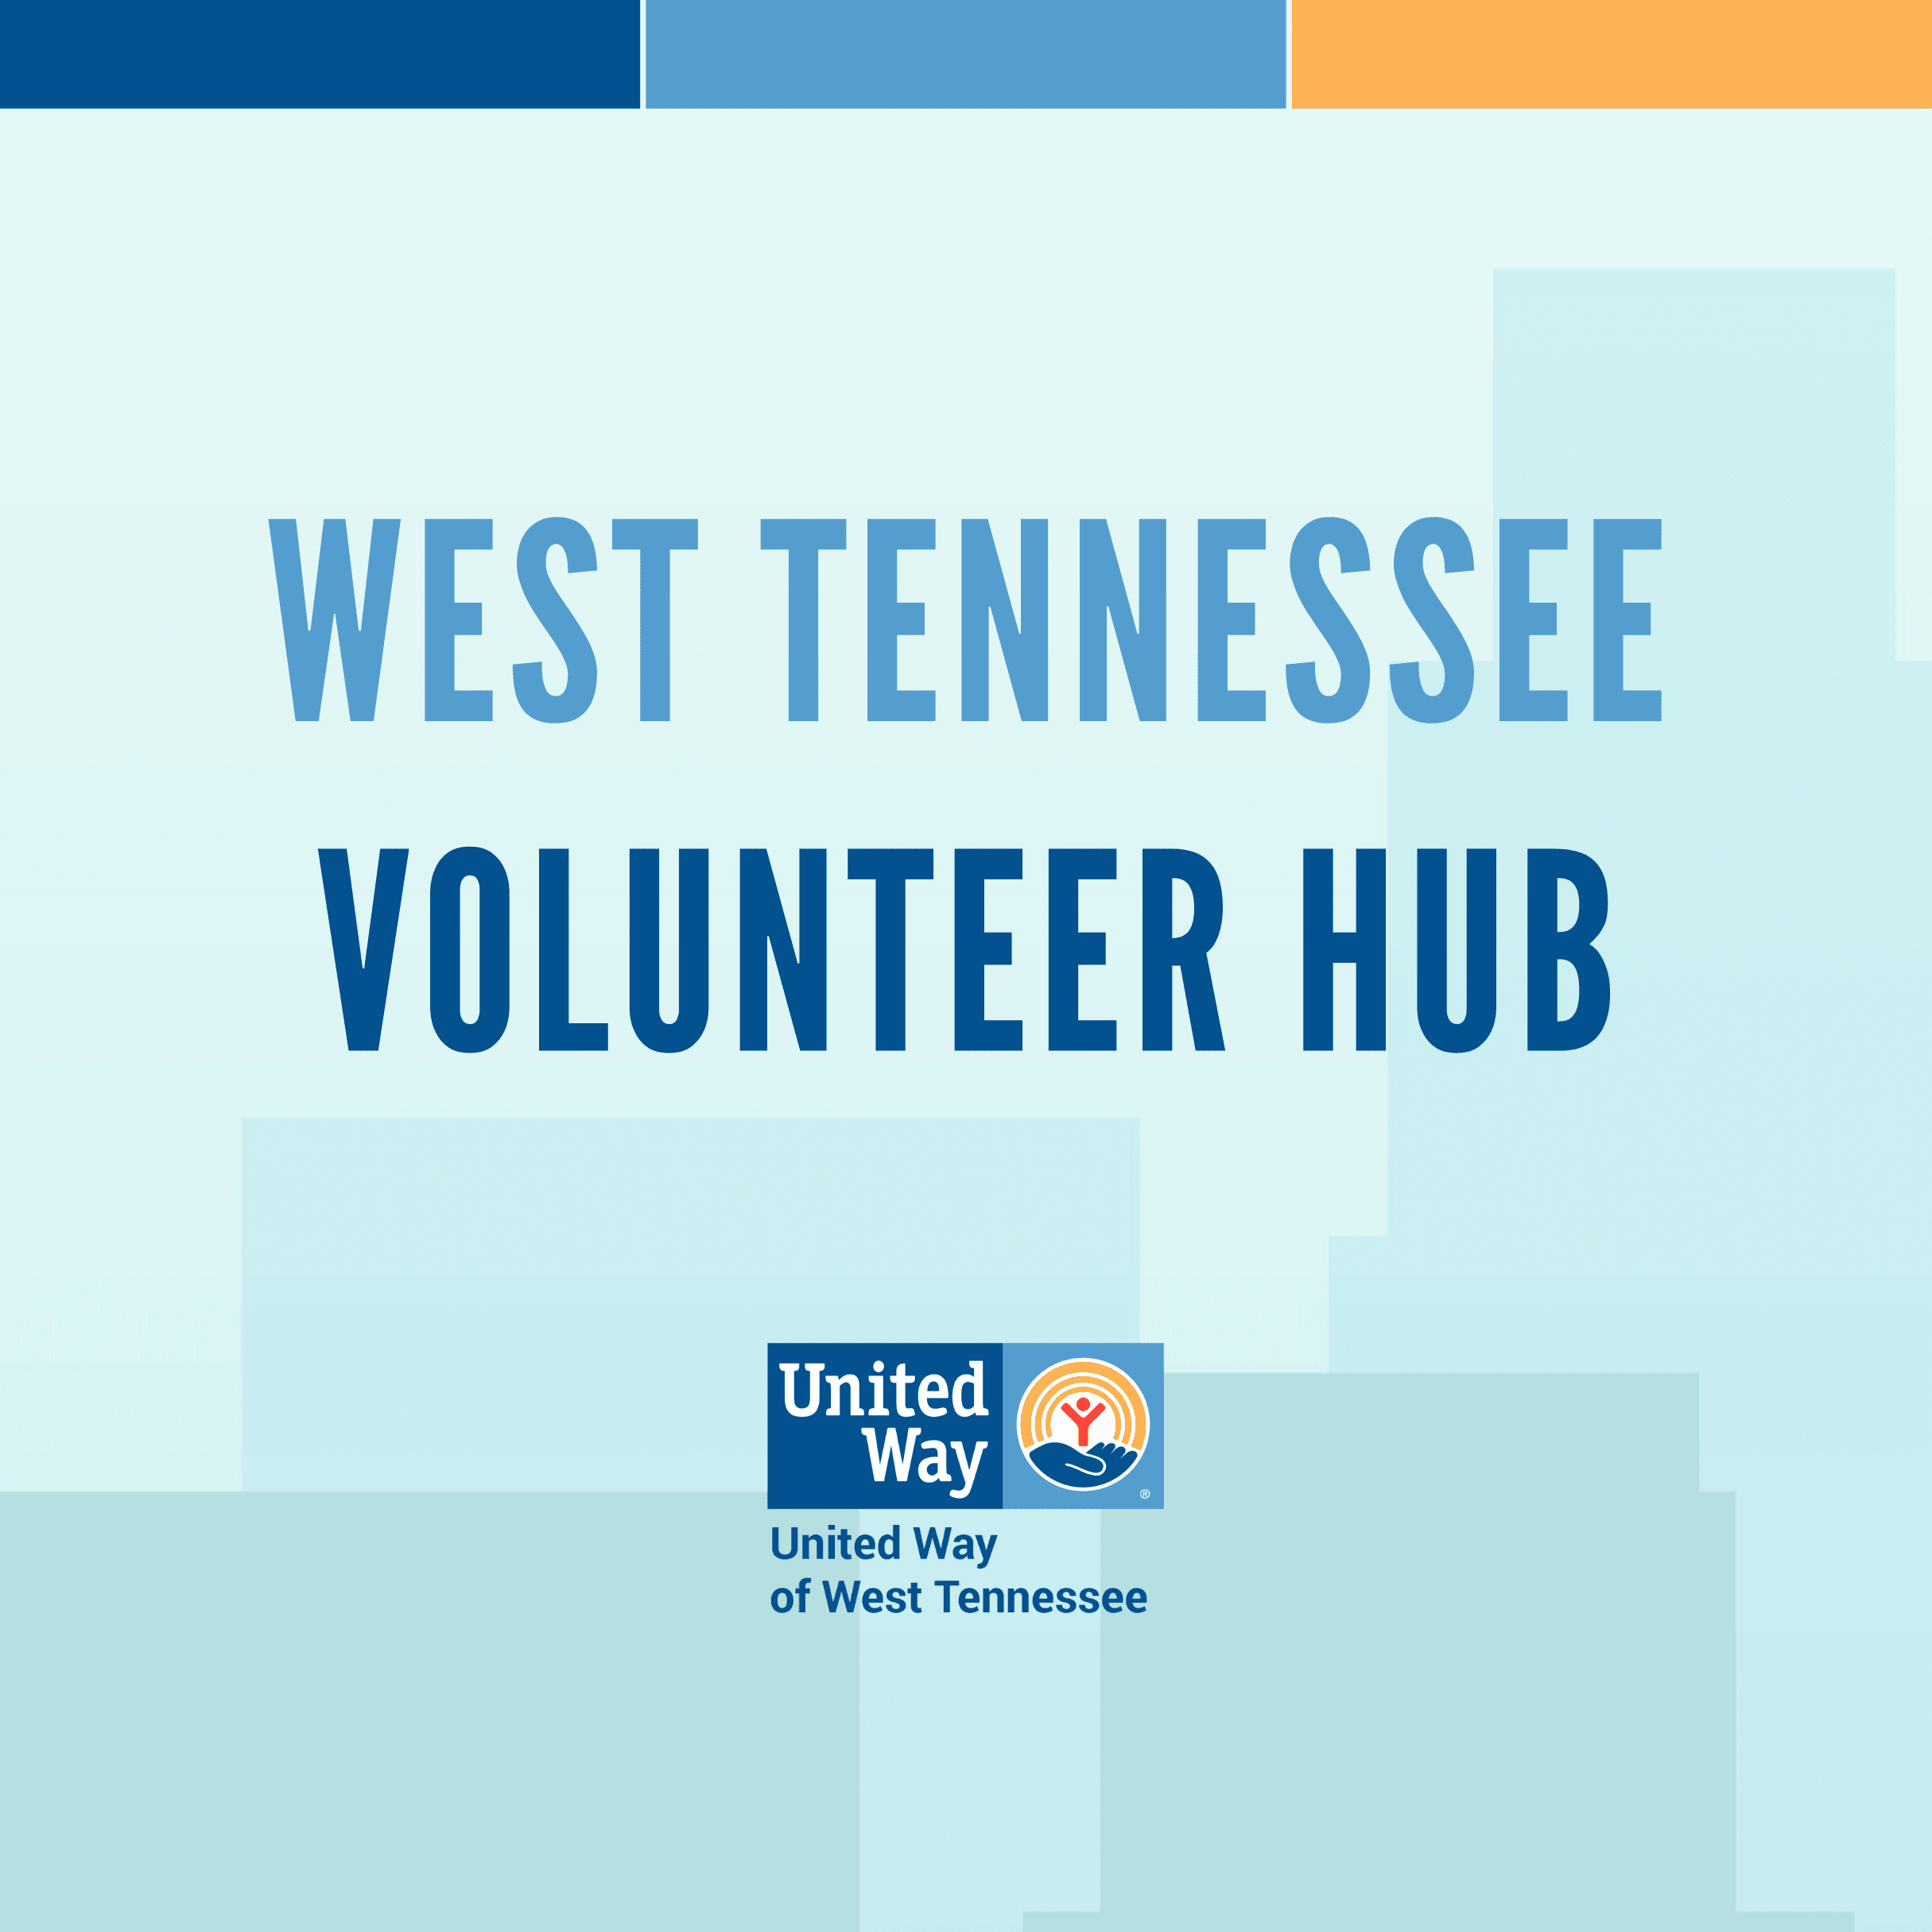 West Tennessee Volunteer Hub